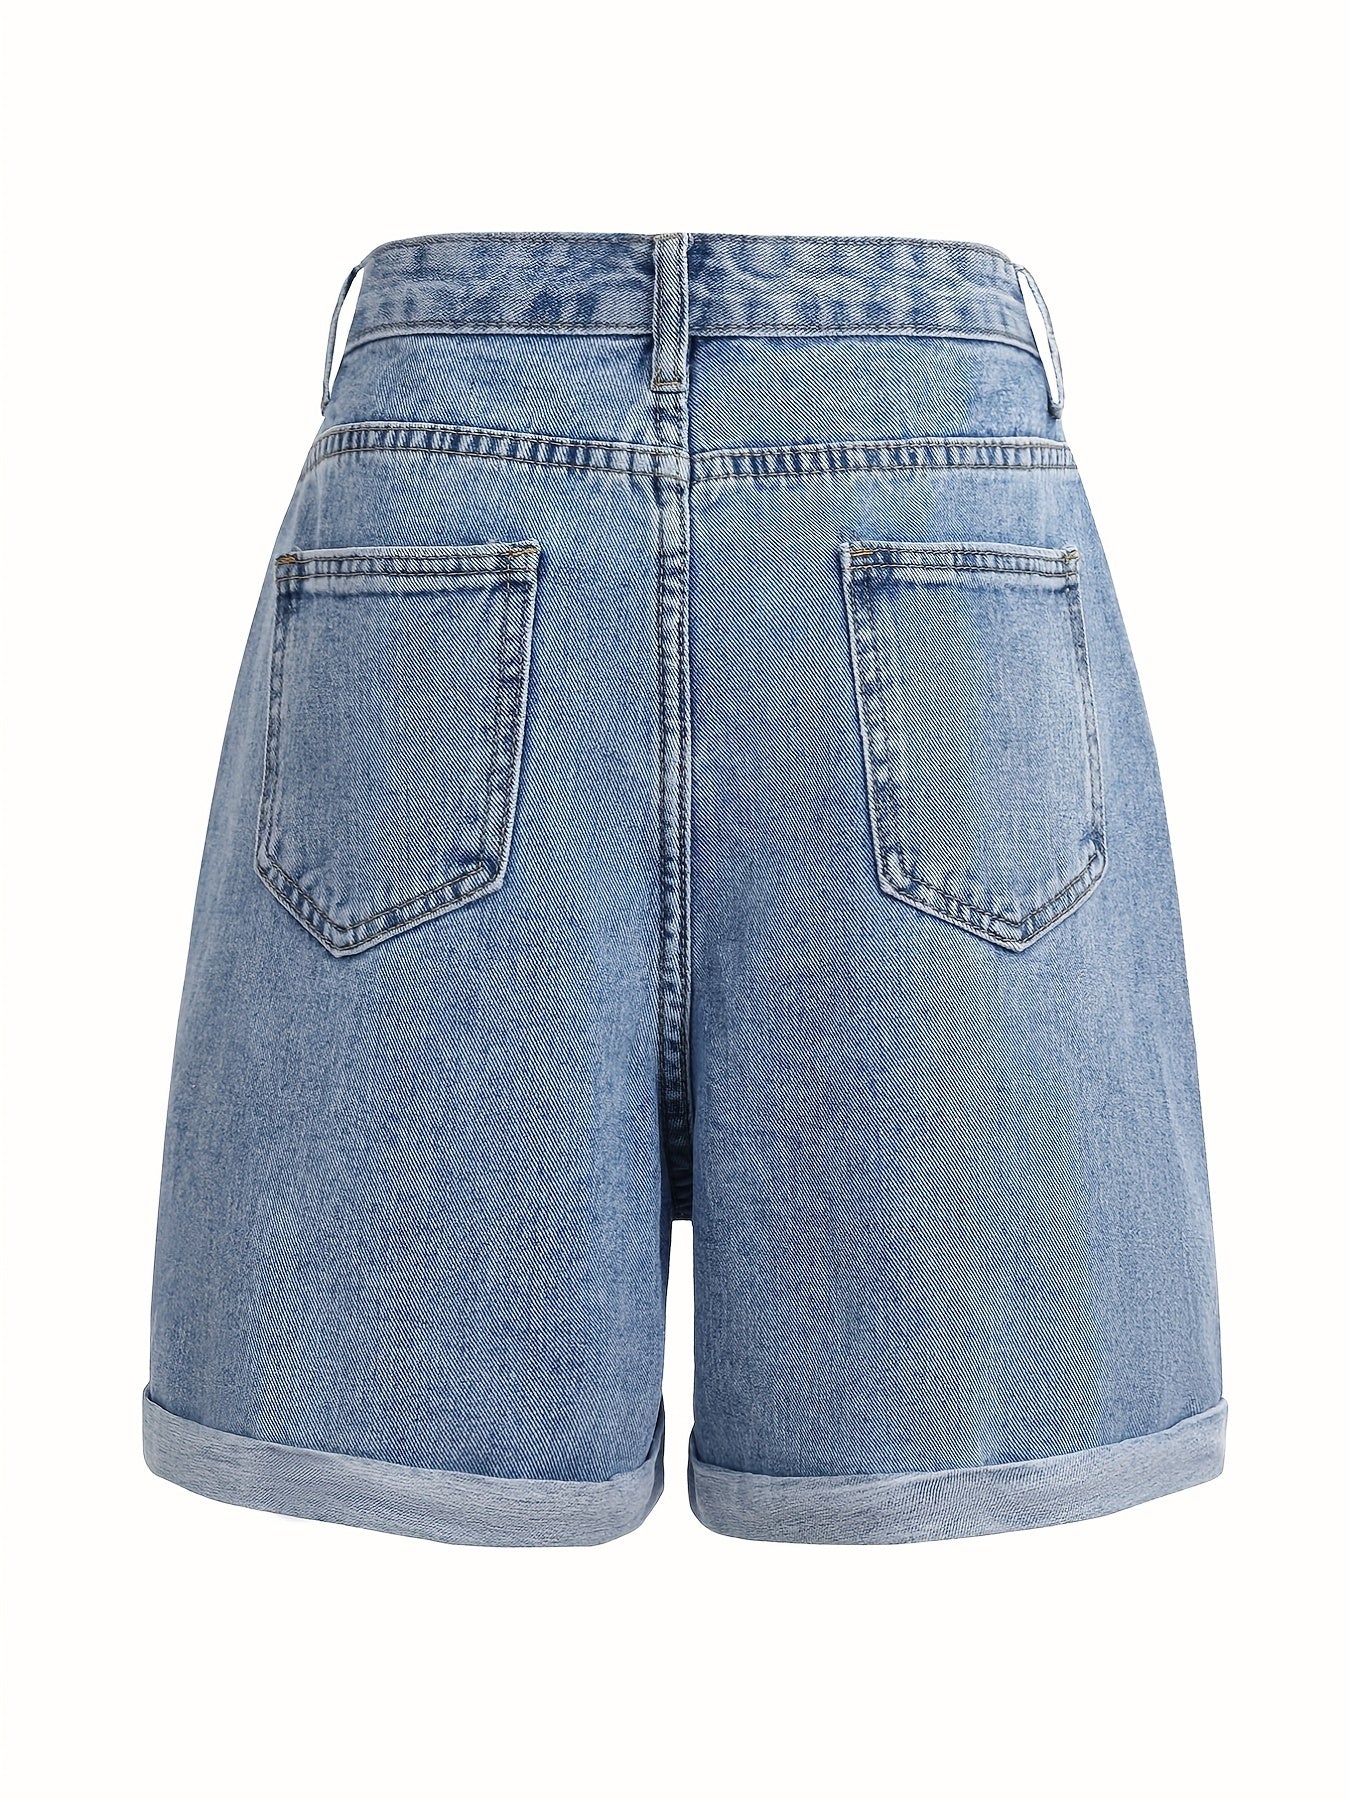 「binfenxie」Blue High Waist Short Denim Pants, Rolled Hem High Rise Slash Pockets Slim Fit Short Denim Trousers, Women's Denim Jeans & Clothing